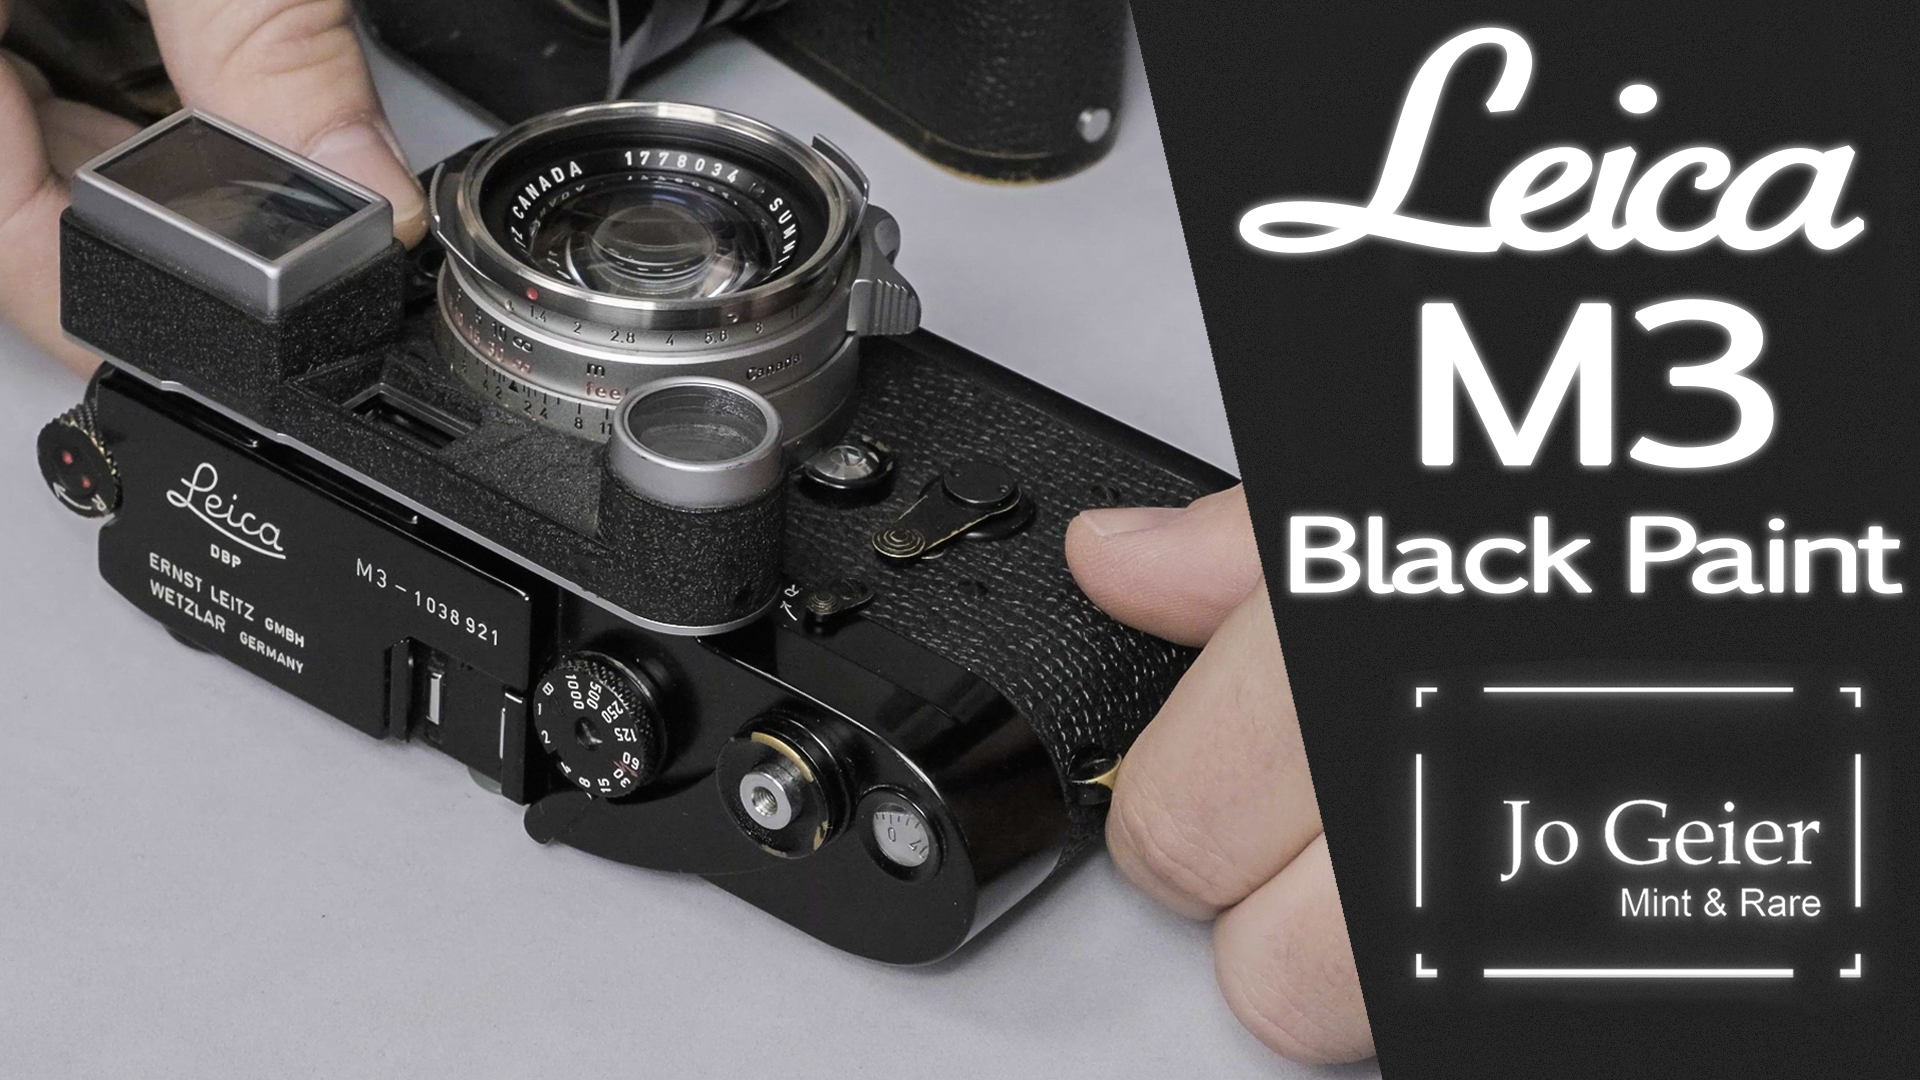 Leitz Leica M3 Black Paint Cameras and Lenses - Jo Geier - Mint & Rare